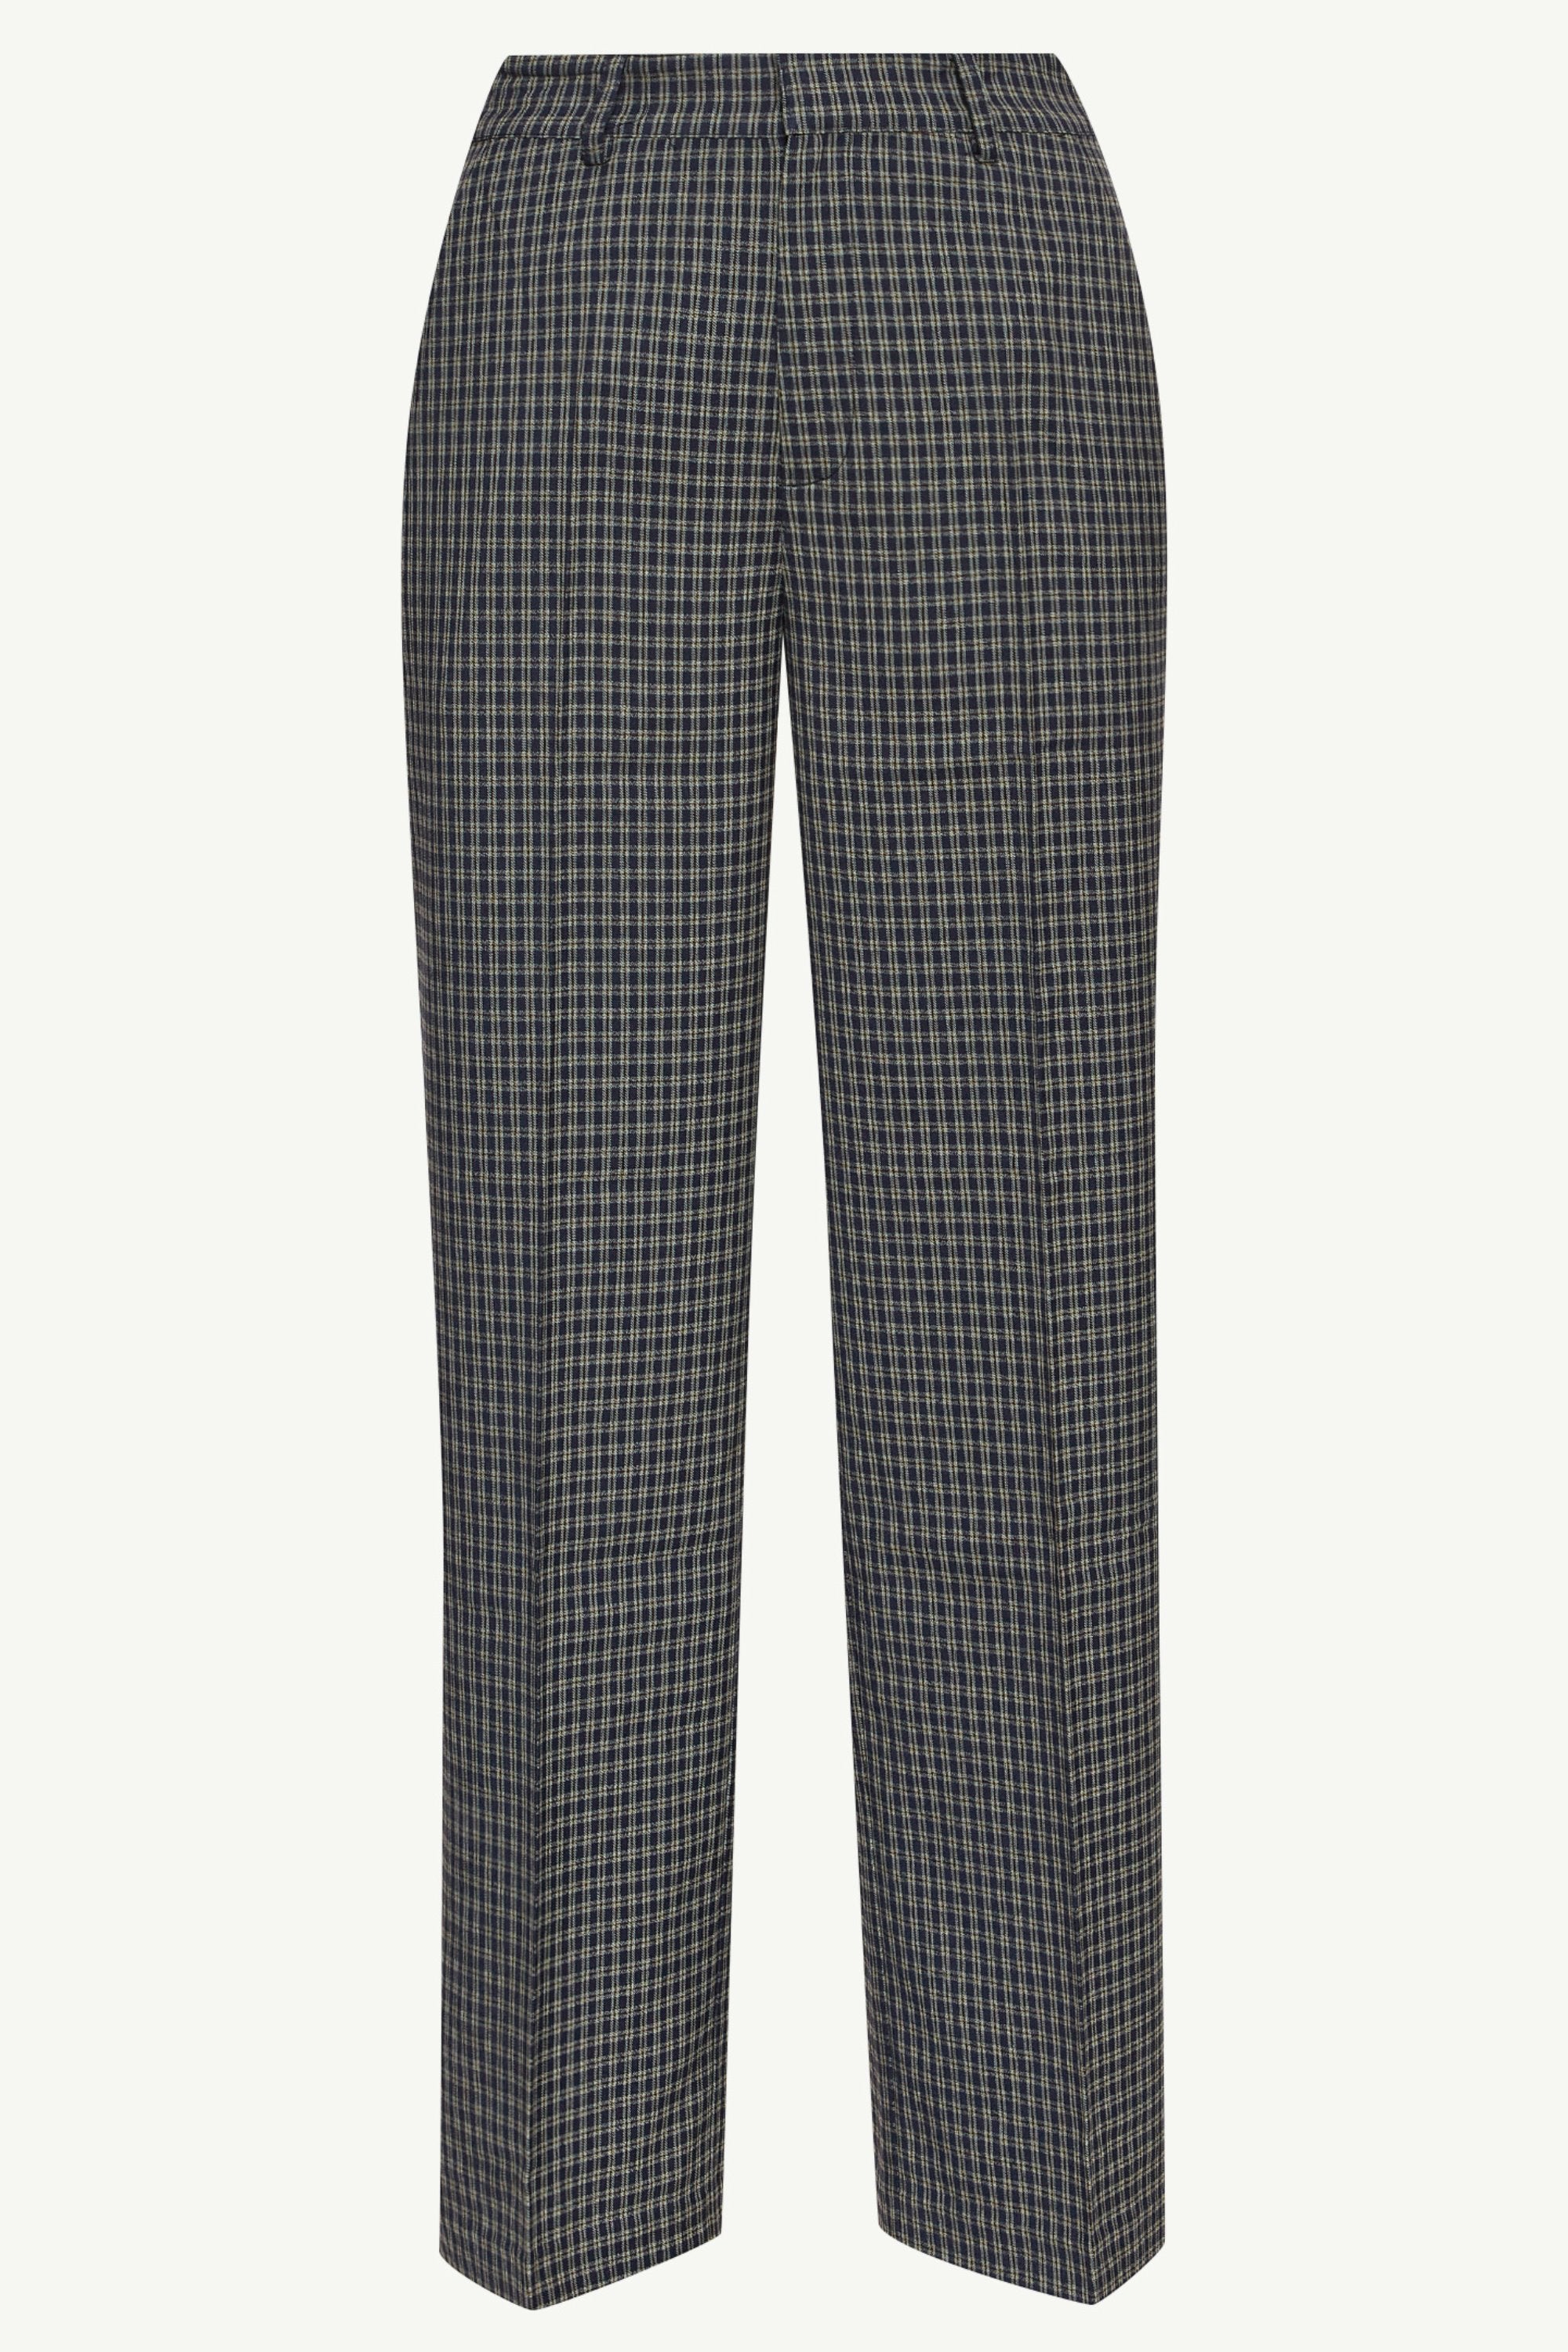 Checkered Blue Wide Leg Pants Clothing epschoolboard 